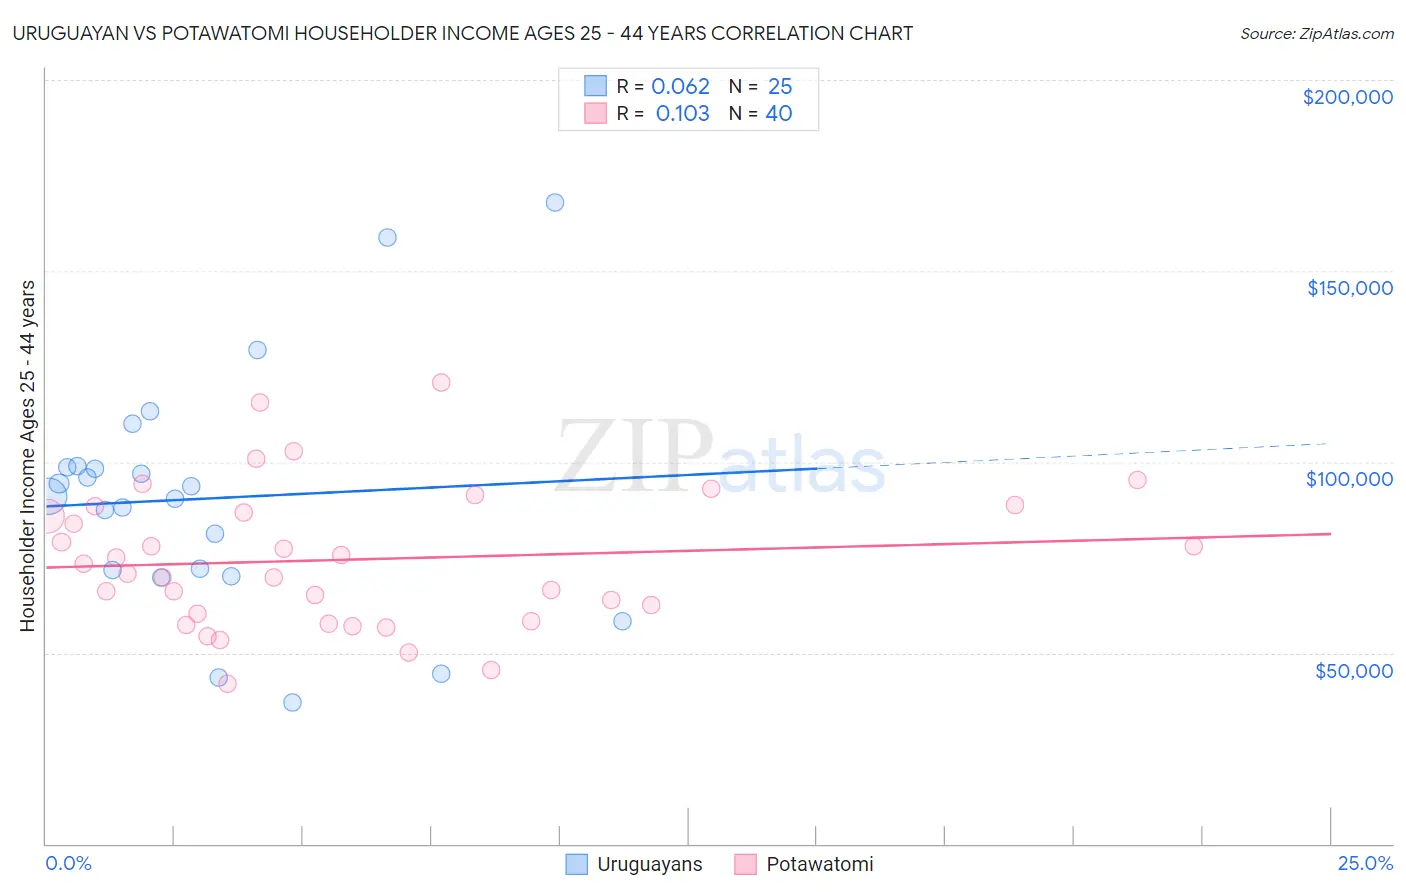 Uruguayan vs Potawatomi Householder Income Ages 25 - 44 years